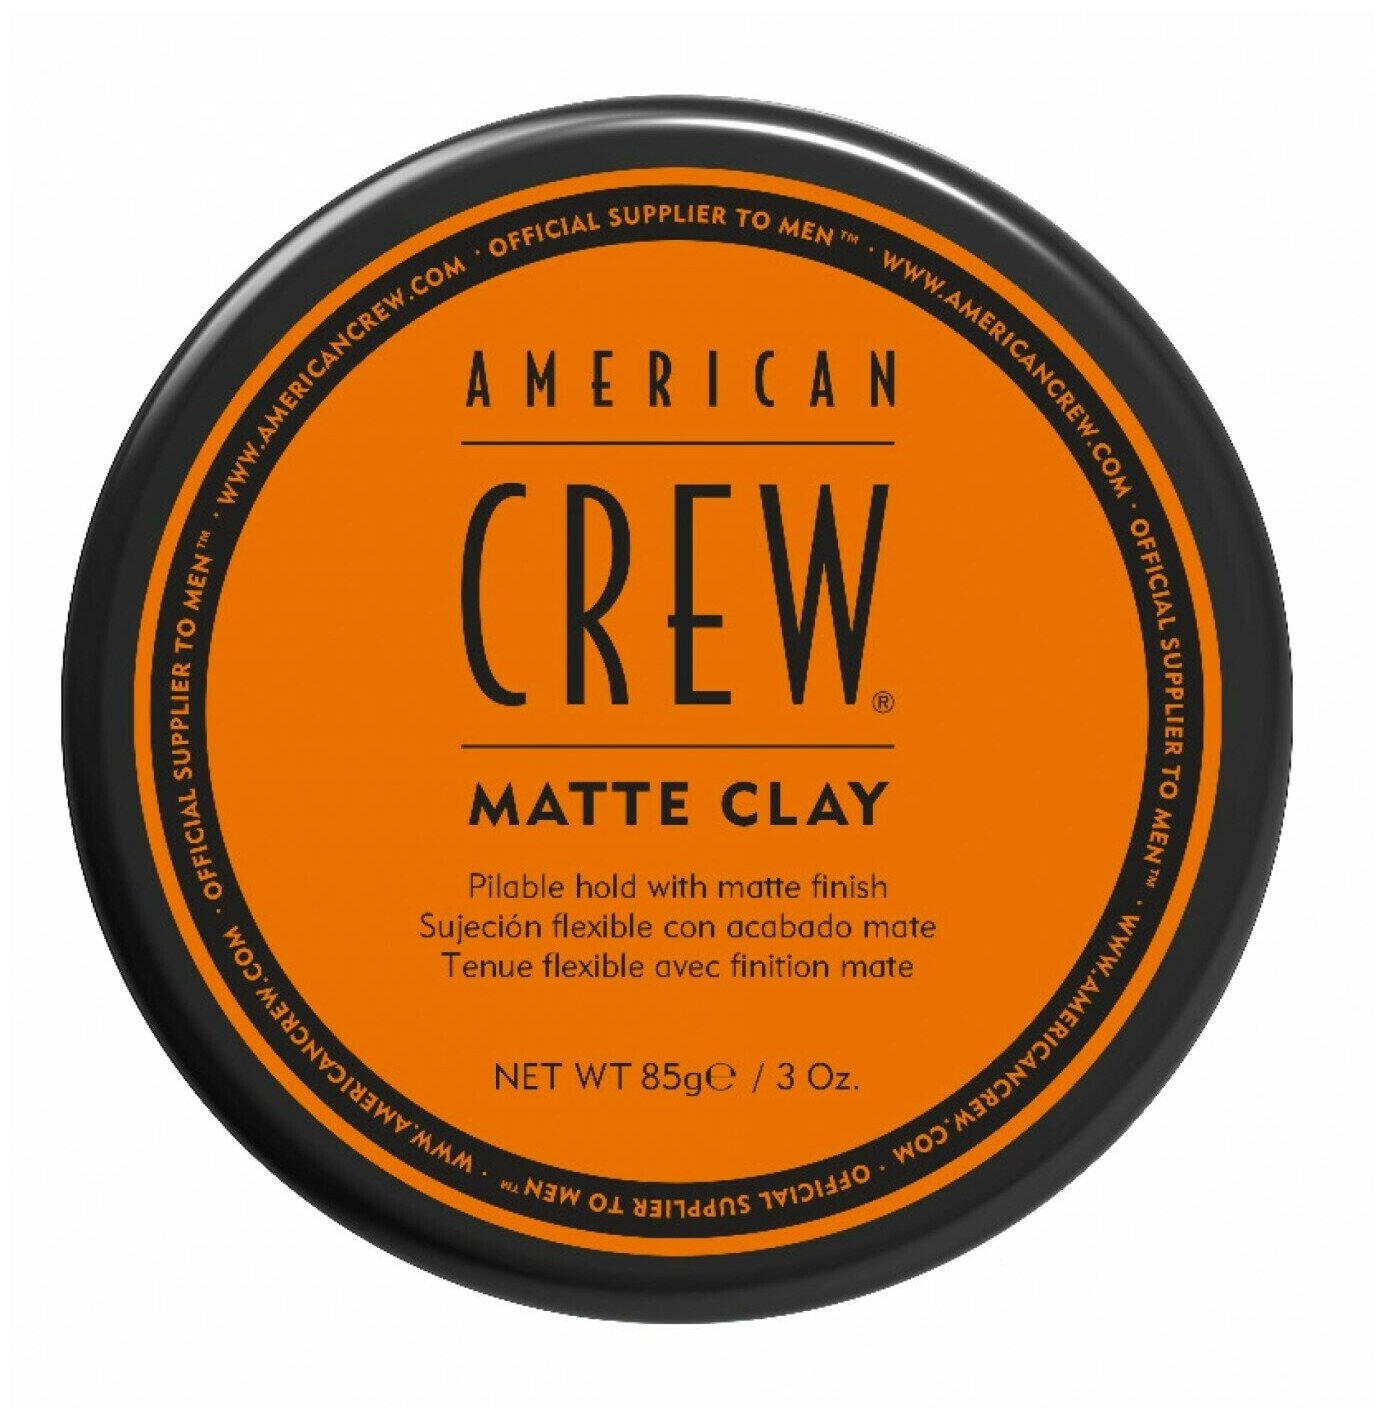 American Crew Глина Matte Clay, сильная фиксация